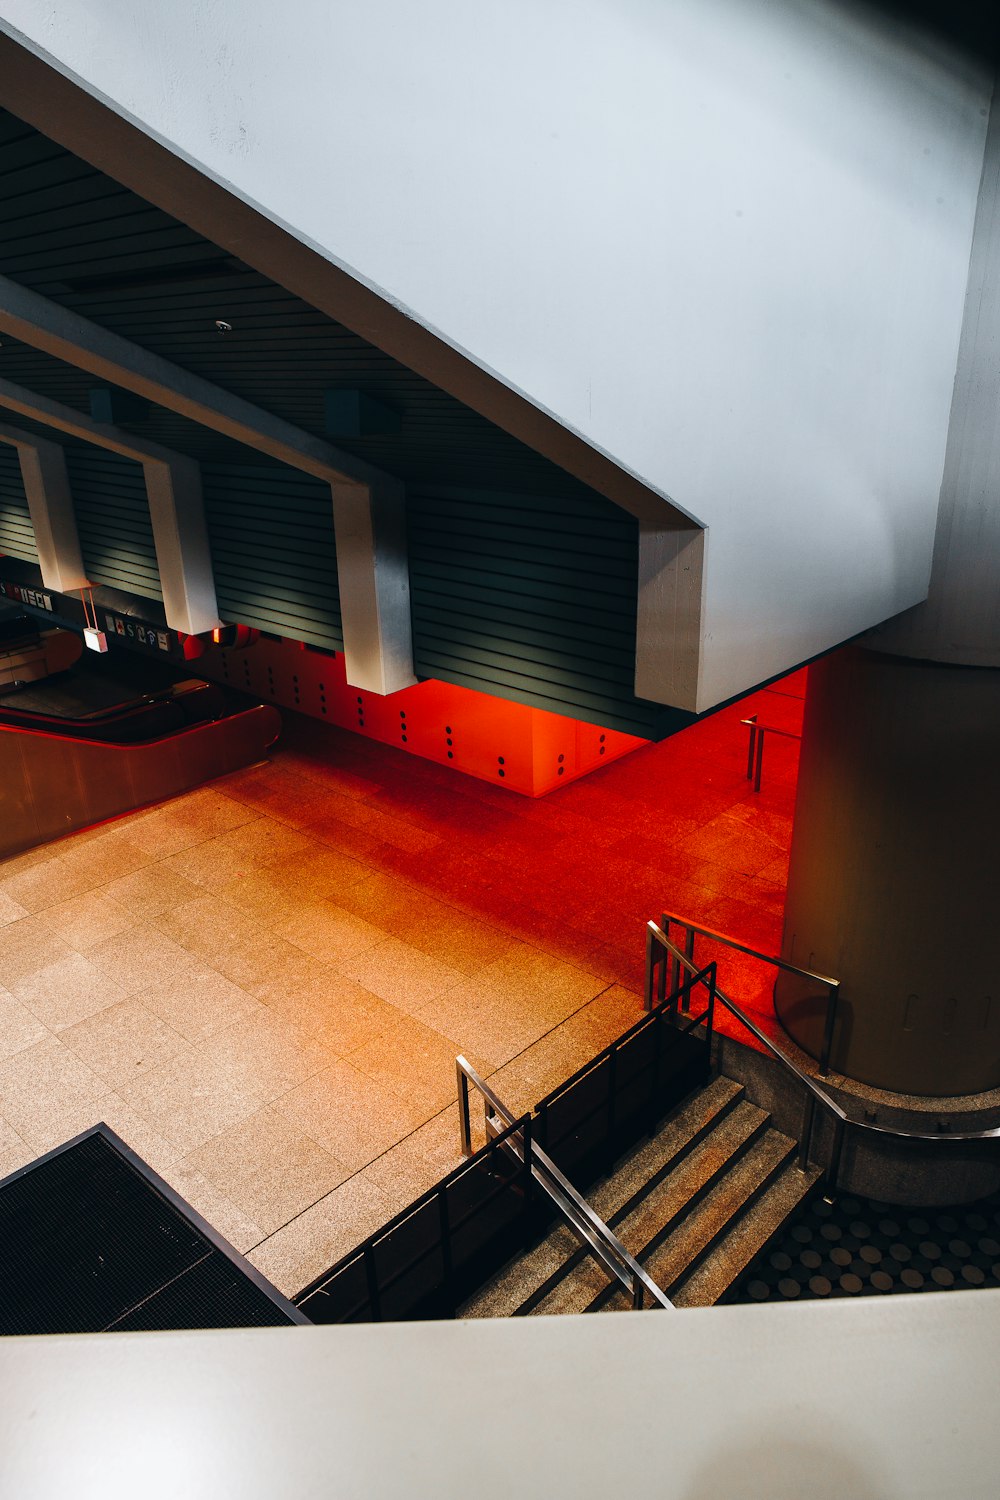 a red carpet in a building